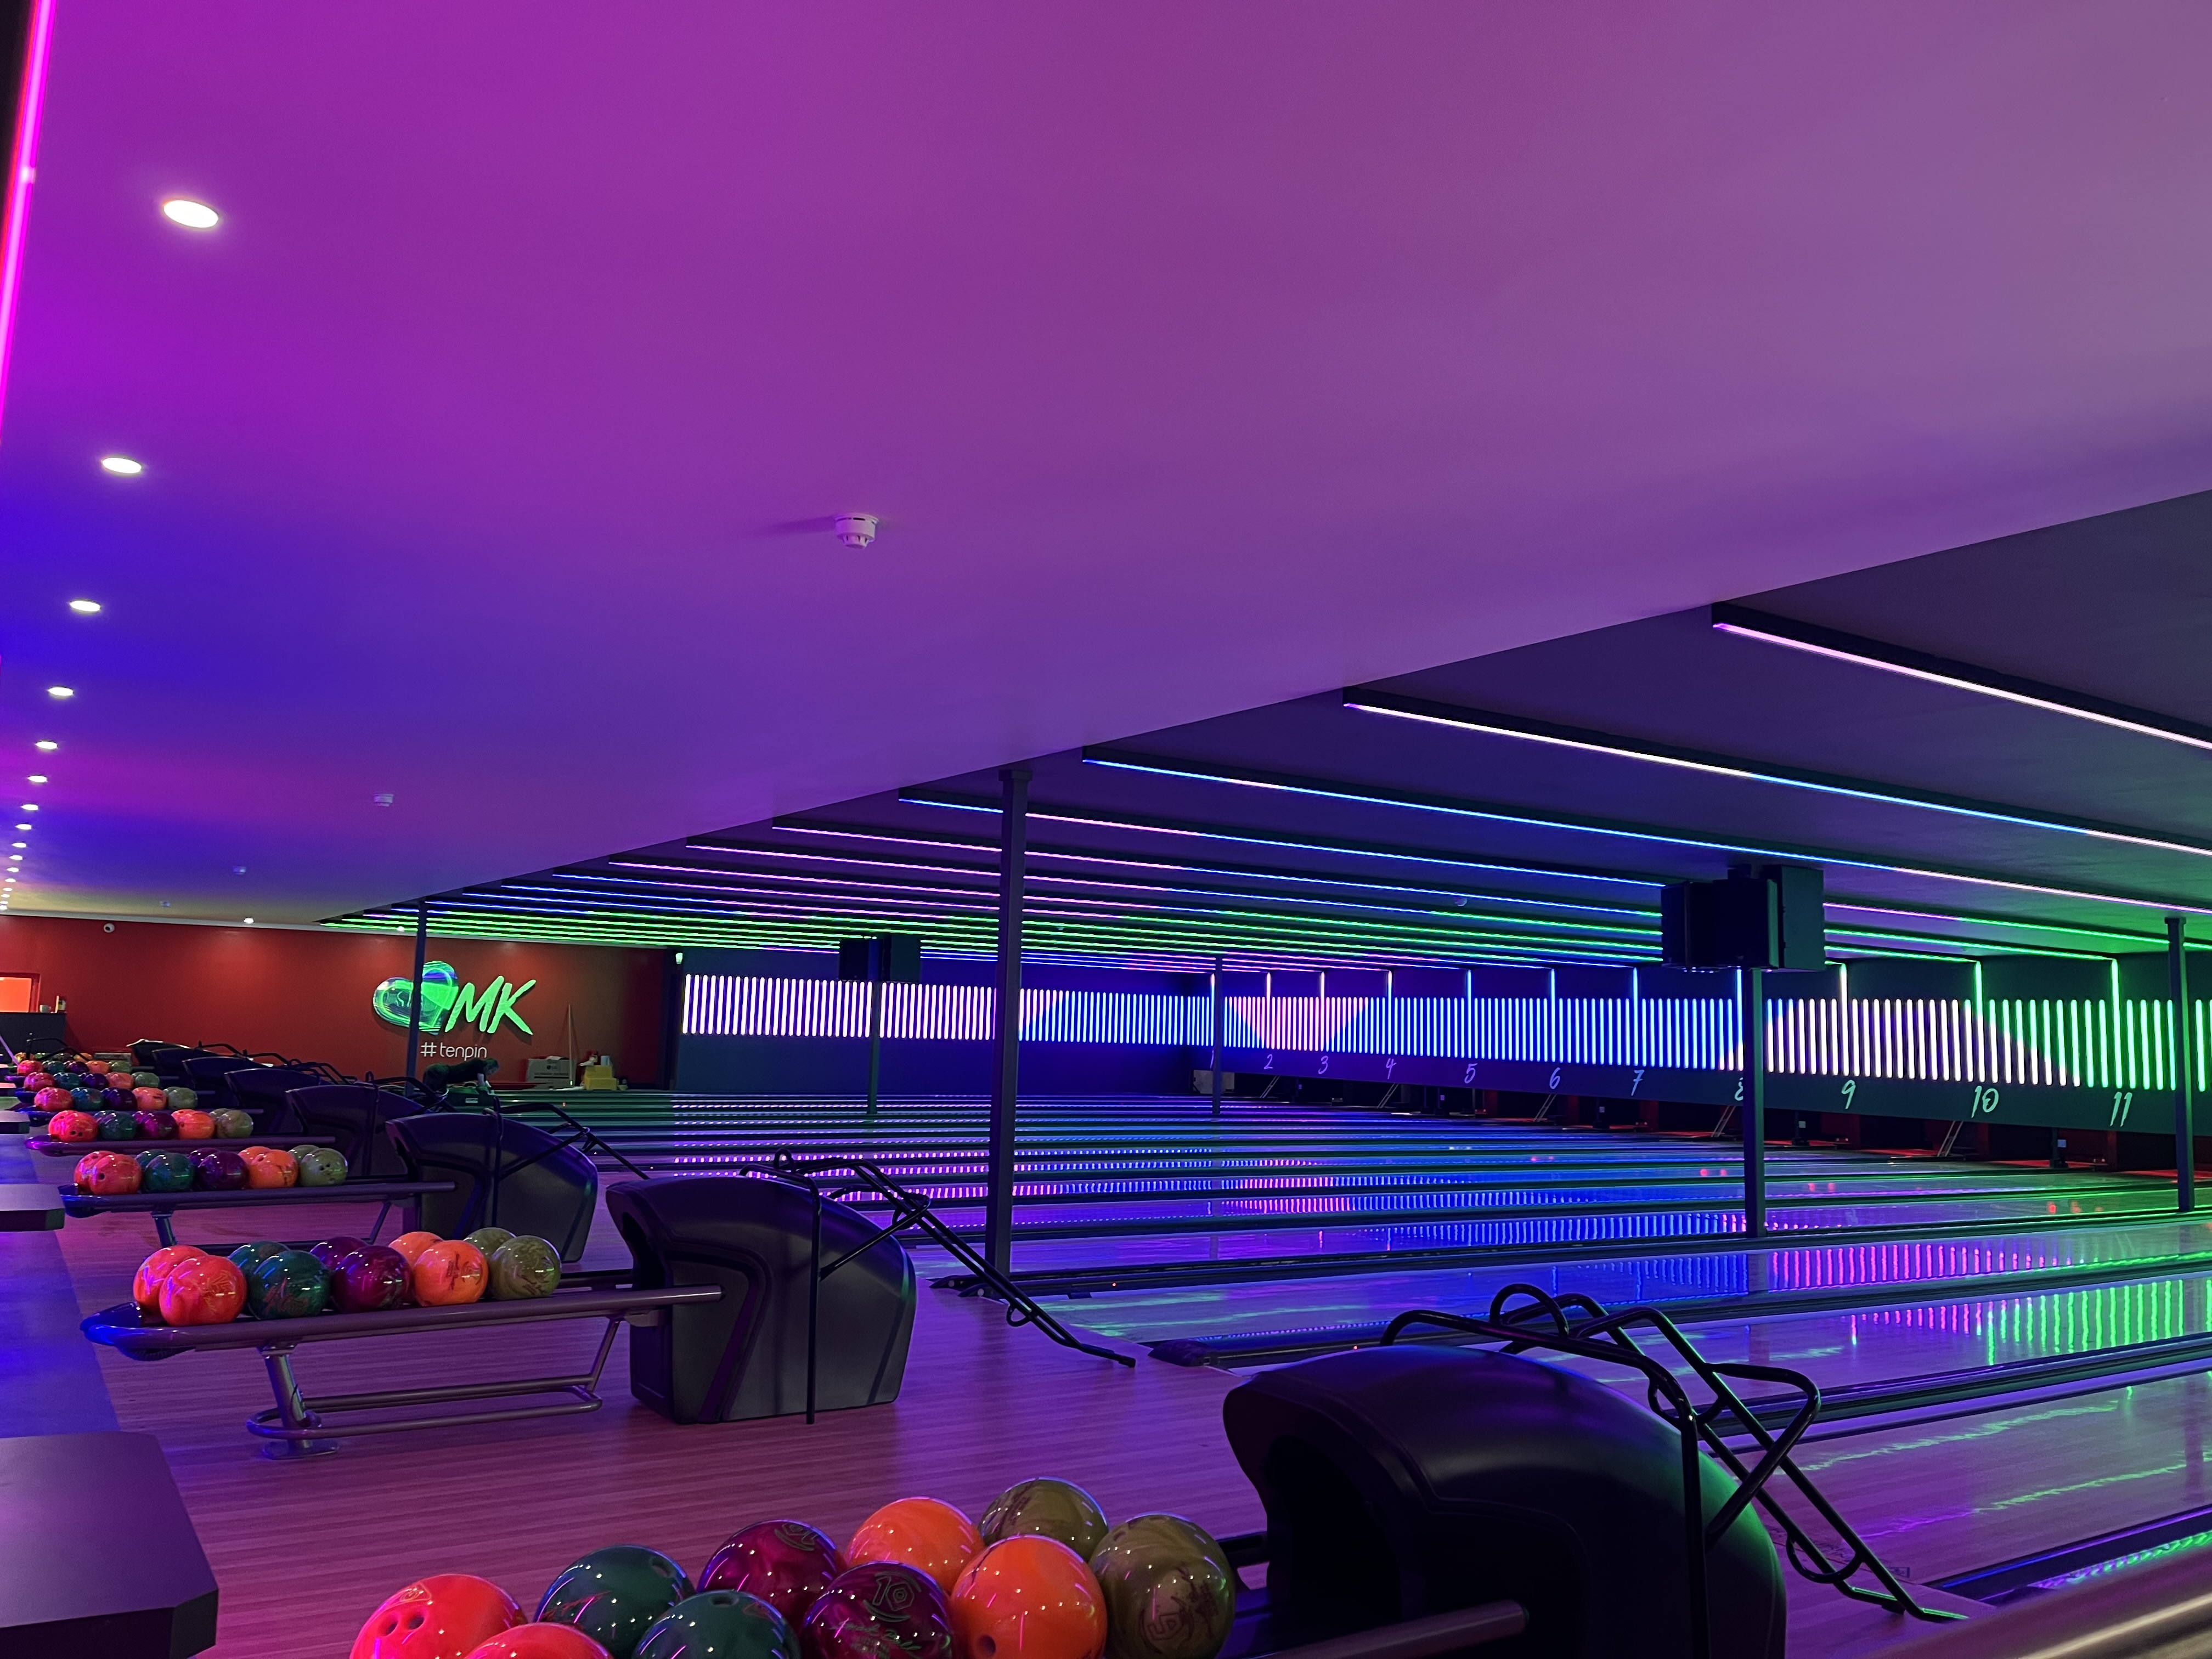 milton keynes tenpin bowling lanes with lighting effects